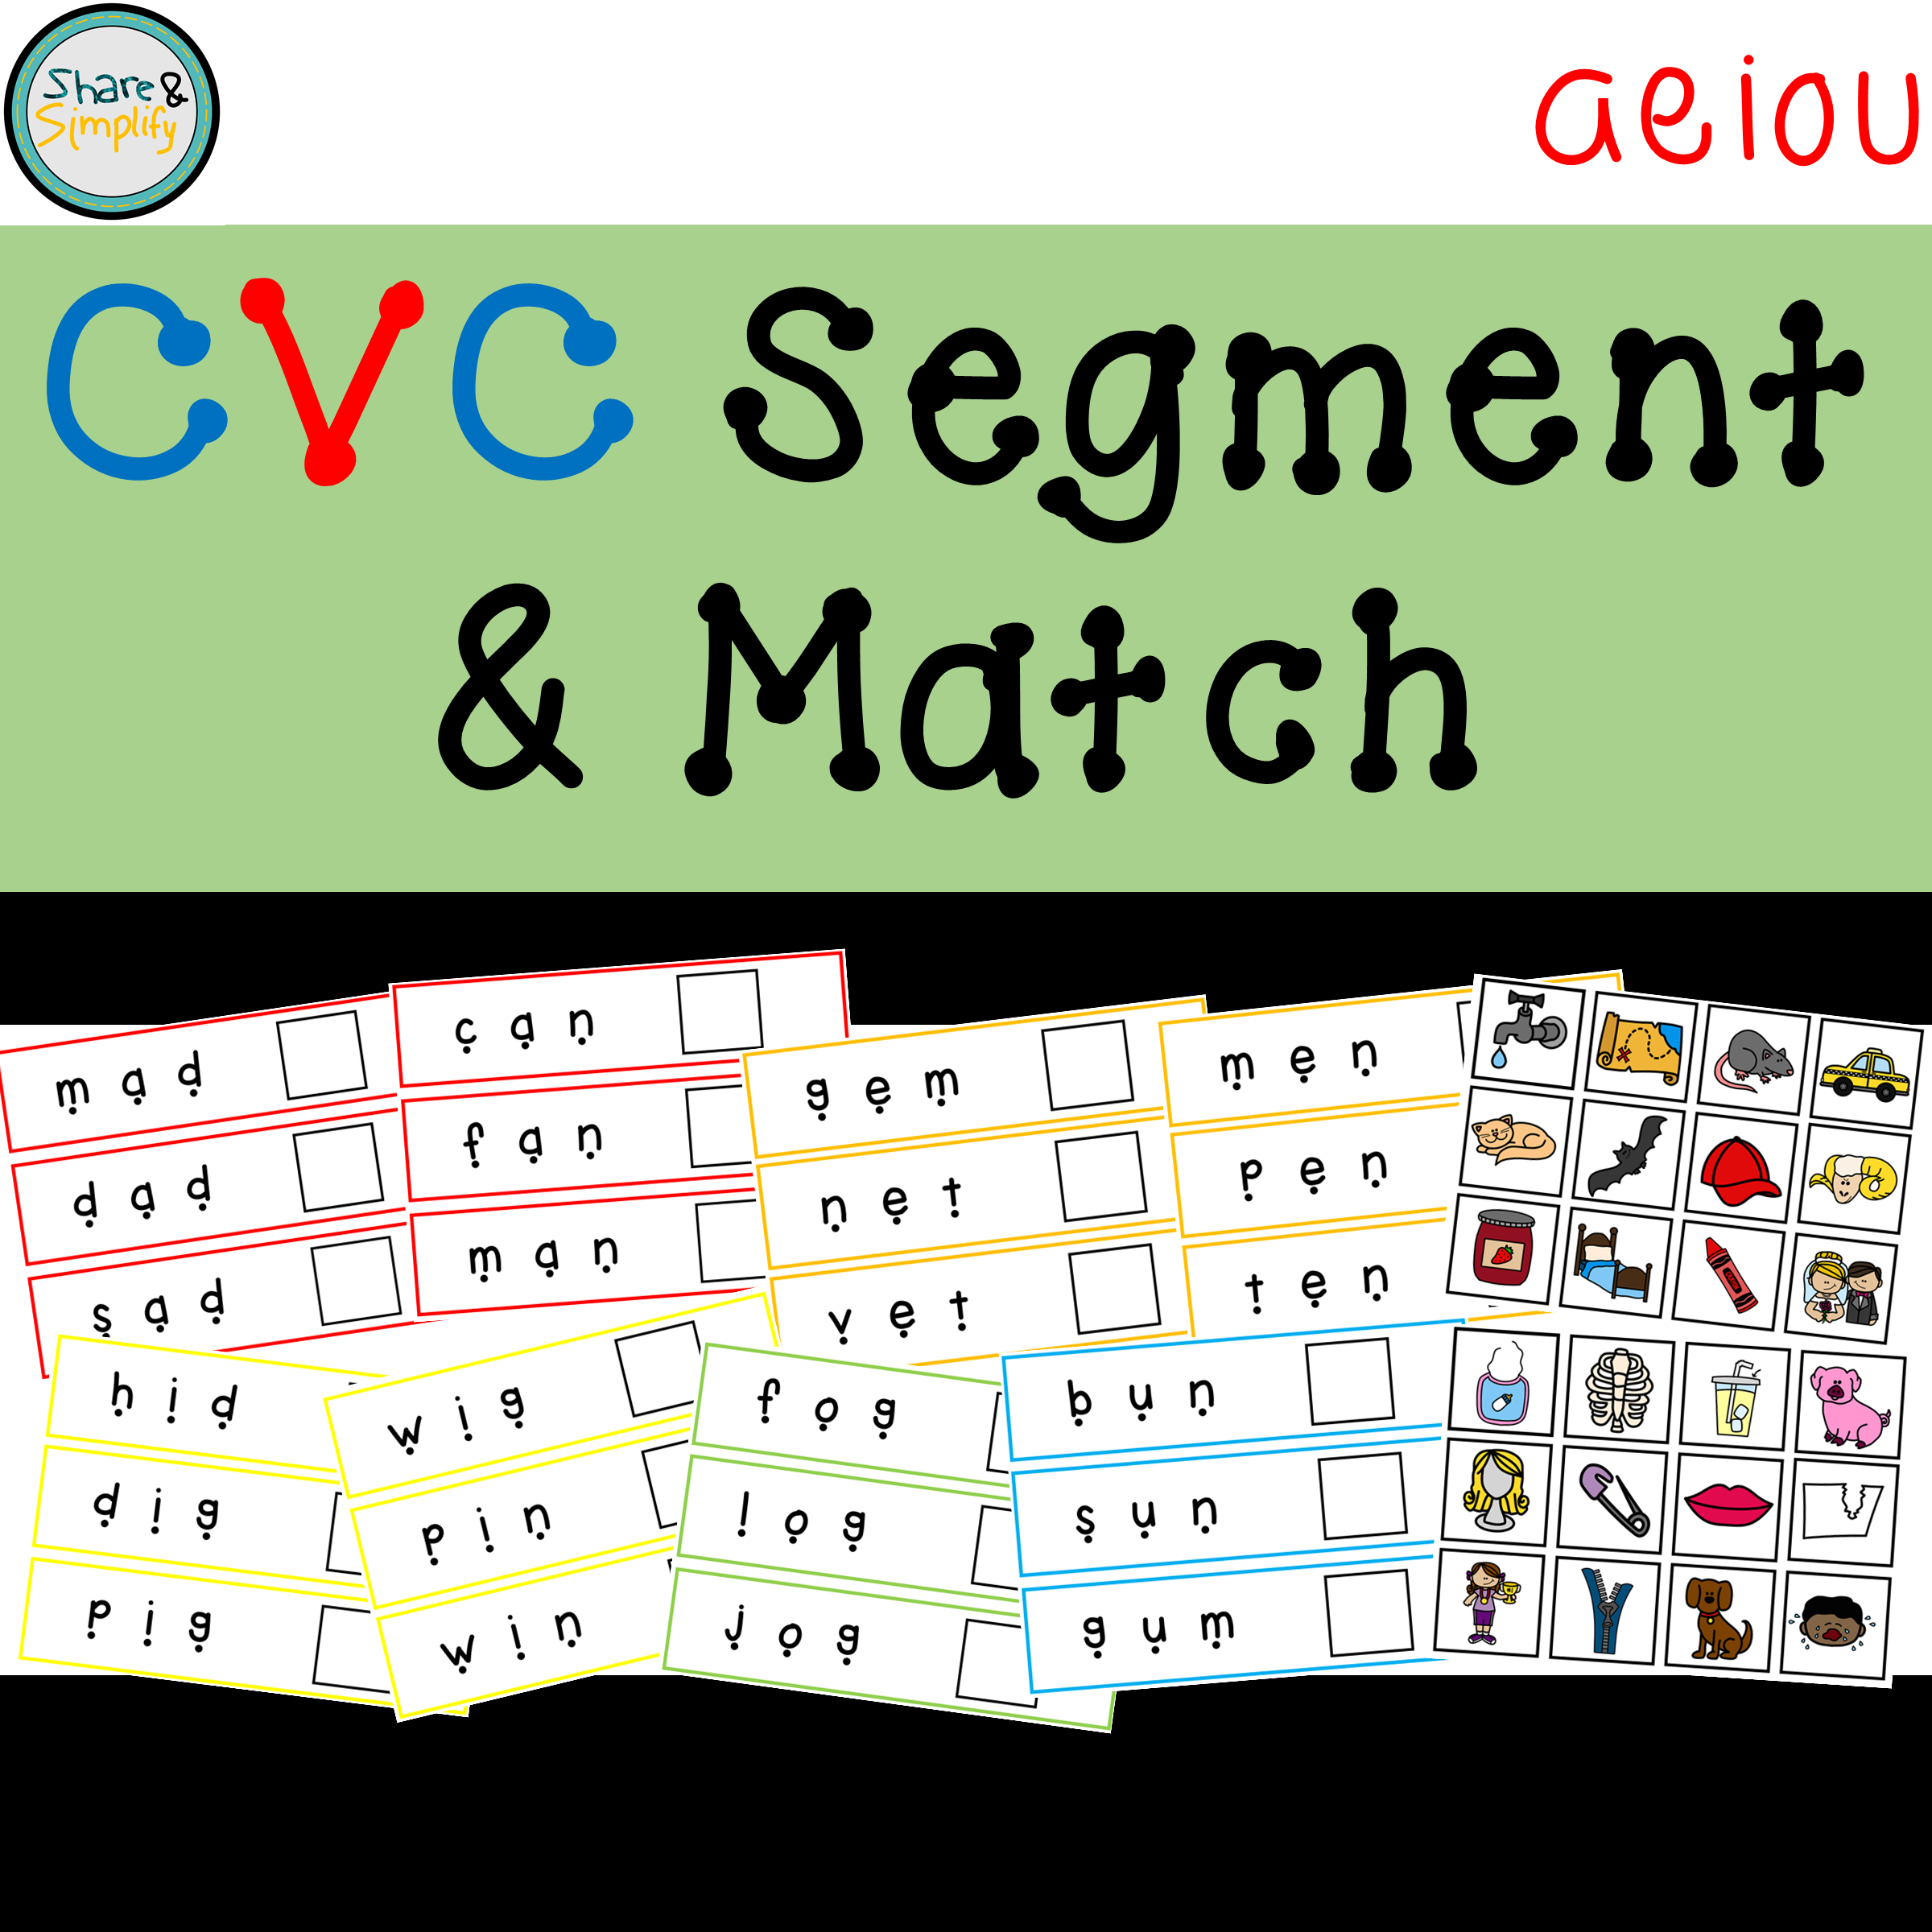 CVC Segment & Match Image - aeiou's featured image